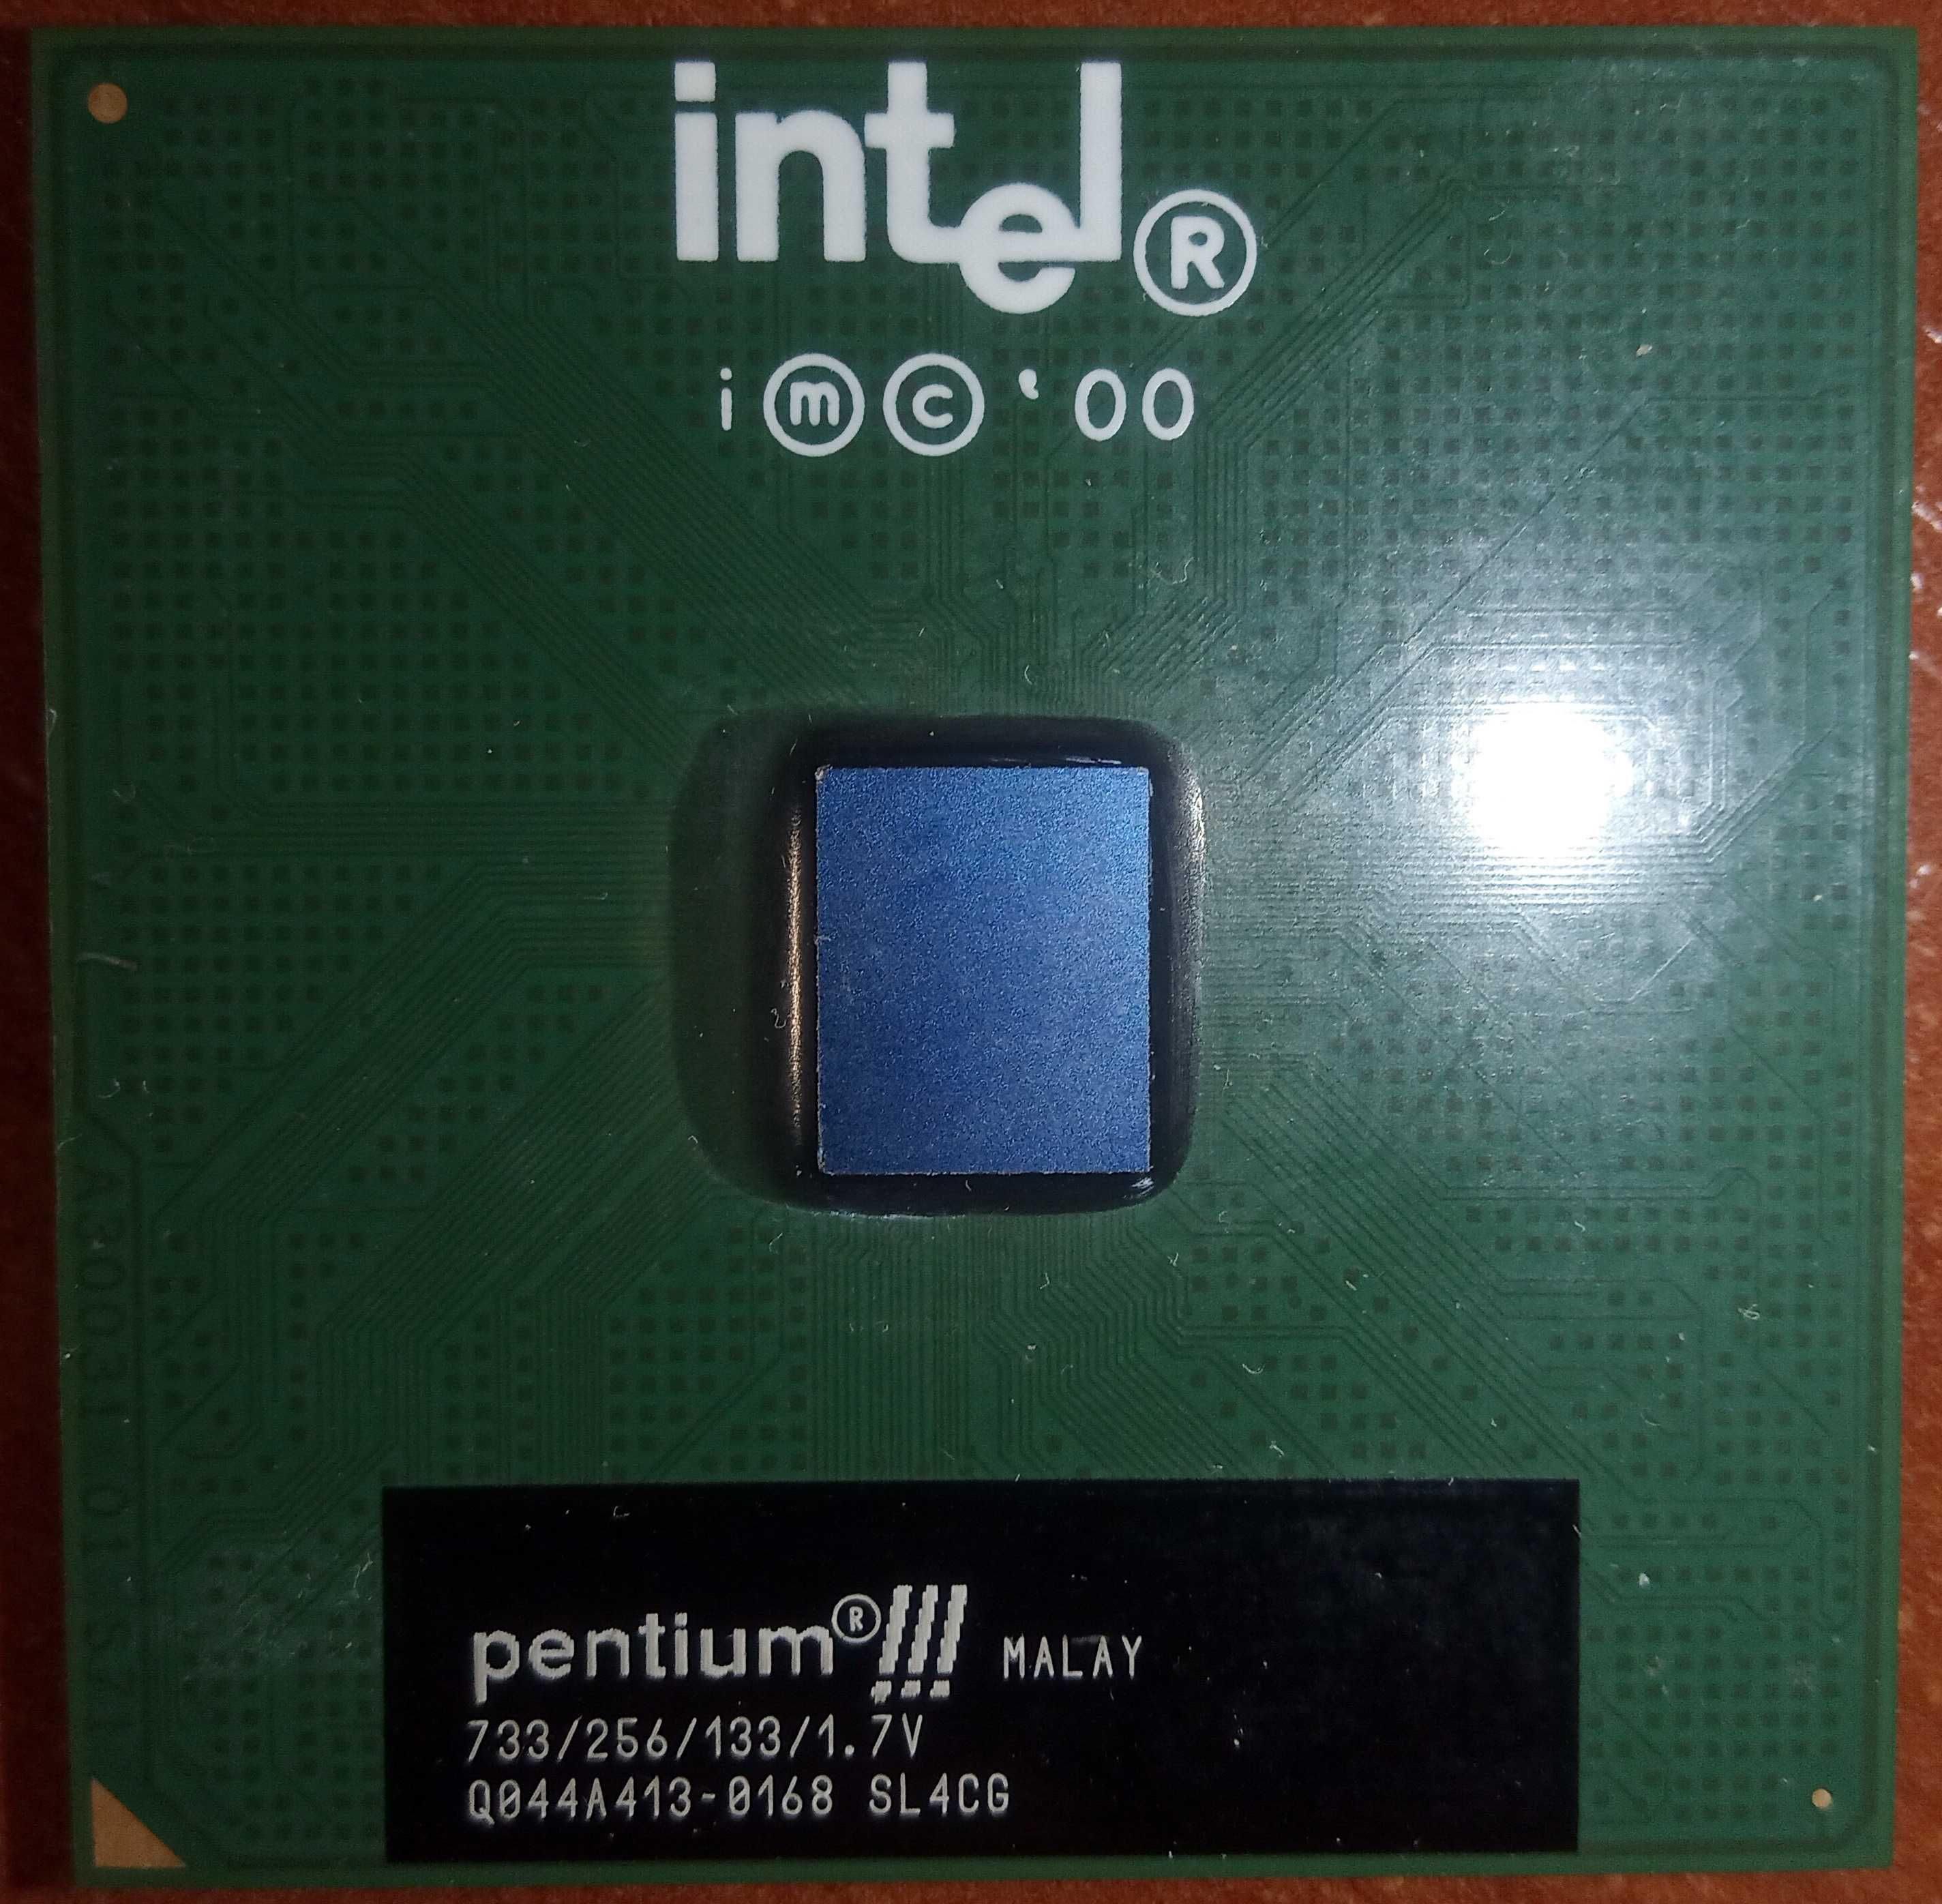 Микропроцессоры AMDX2 Athlon II, Intel Pentium Core2Duo